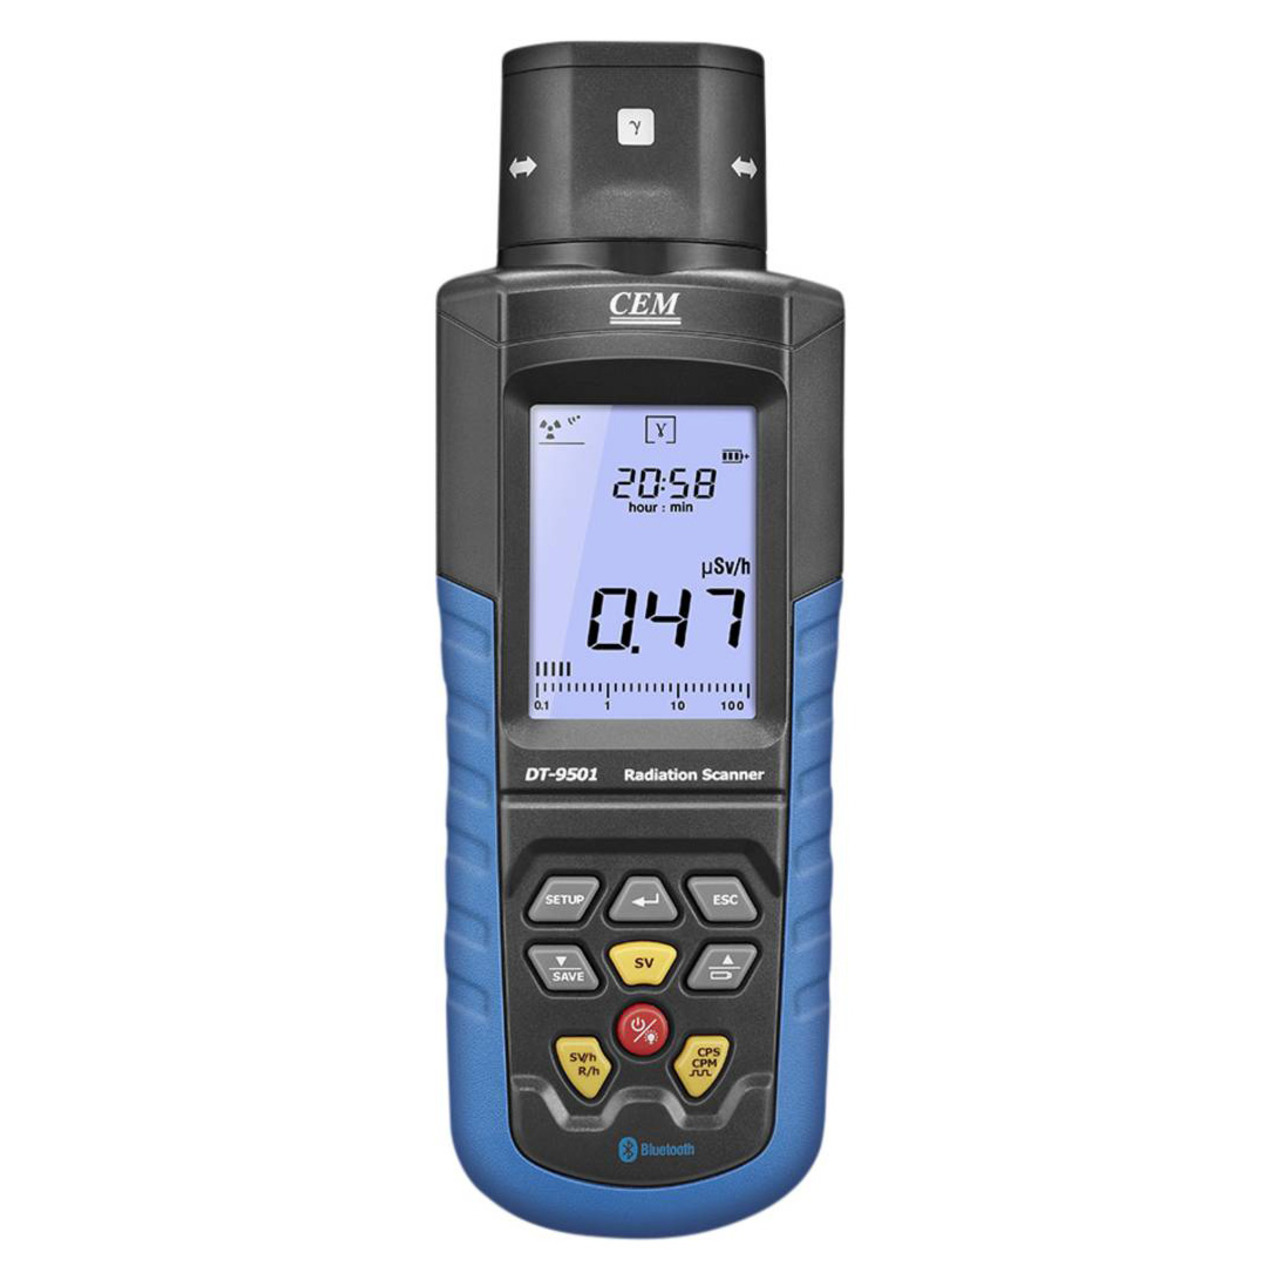 CEM Radioaktivittsmessgert DT-9501- Bluetooth-Schnittstelle unter Messtechnik